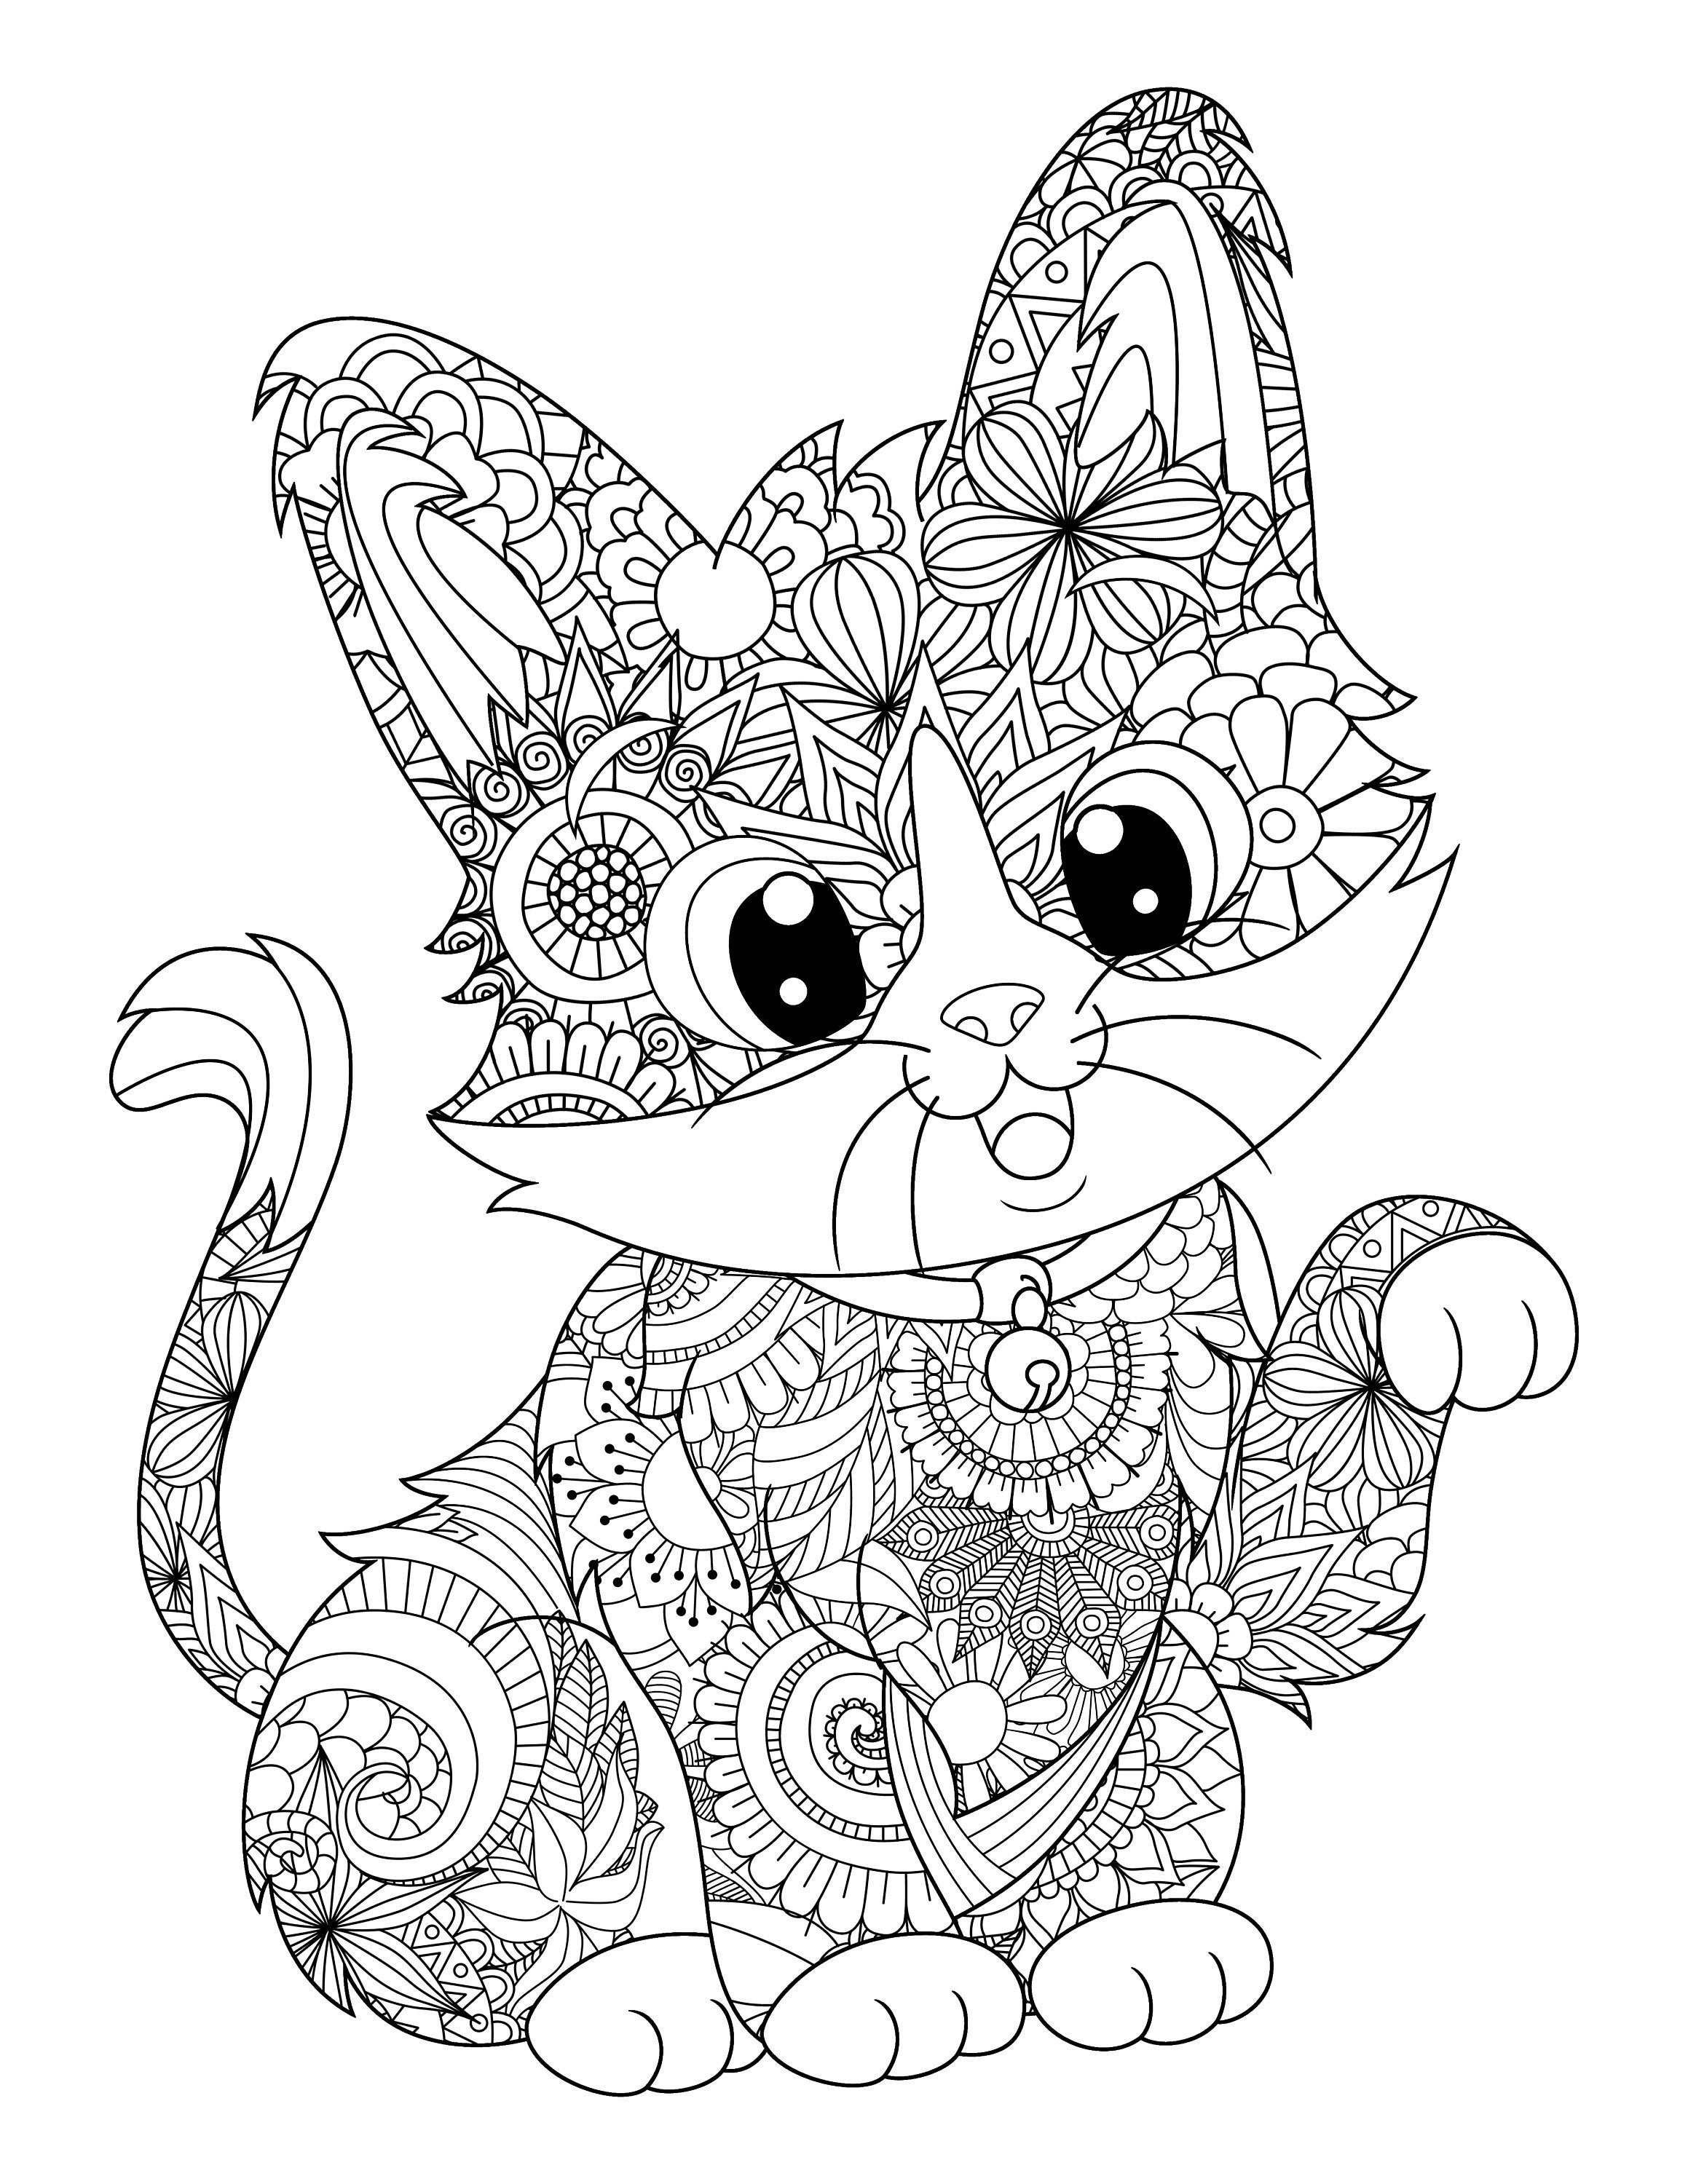 Cat   Animal Mandala Coloring Page   Instant Download POPULAR